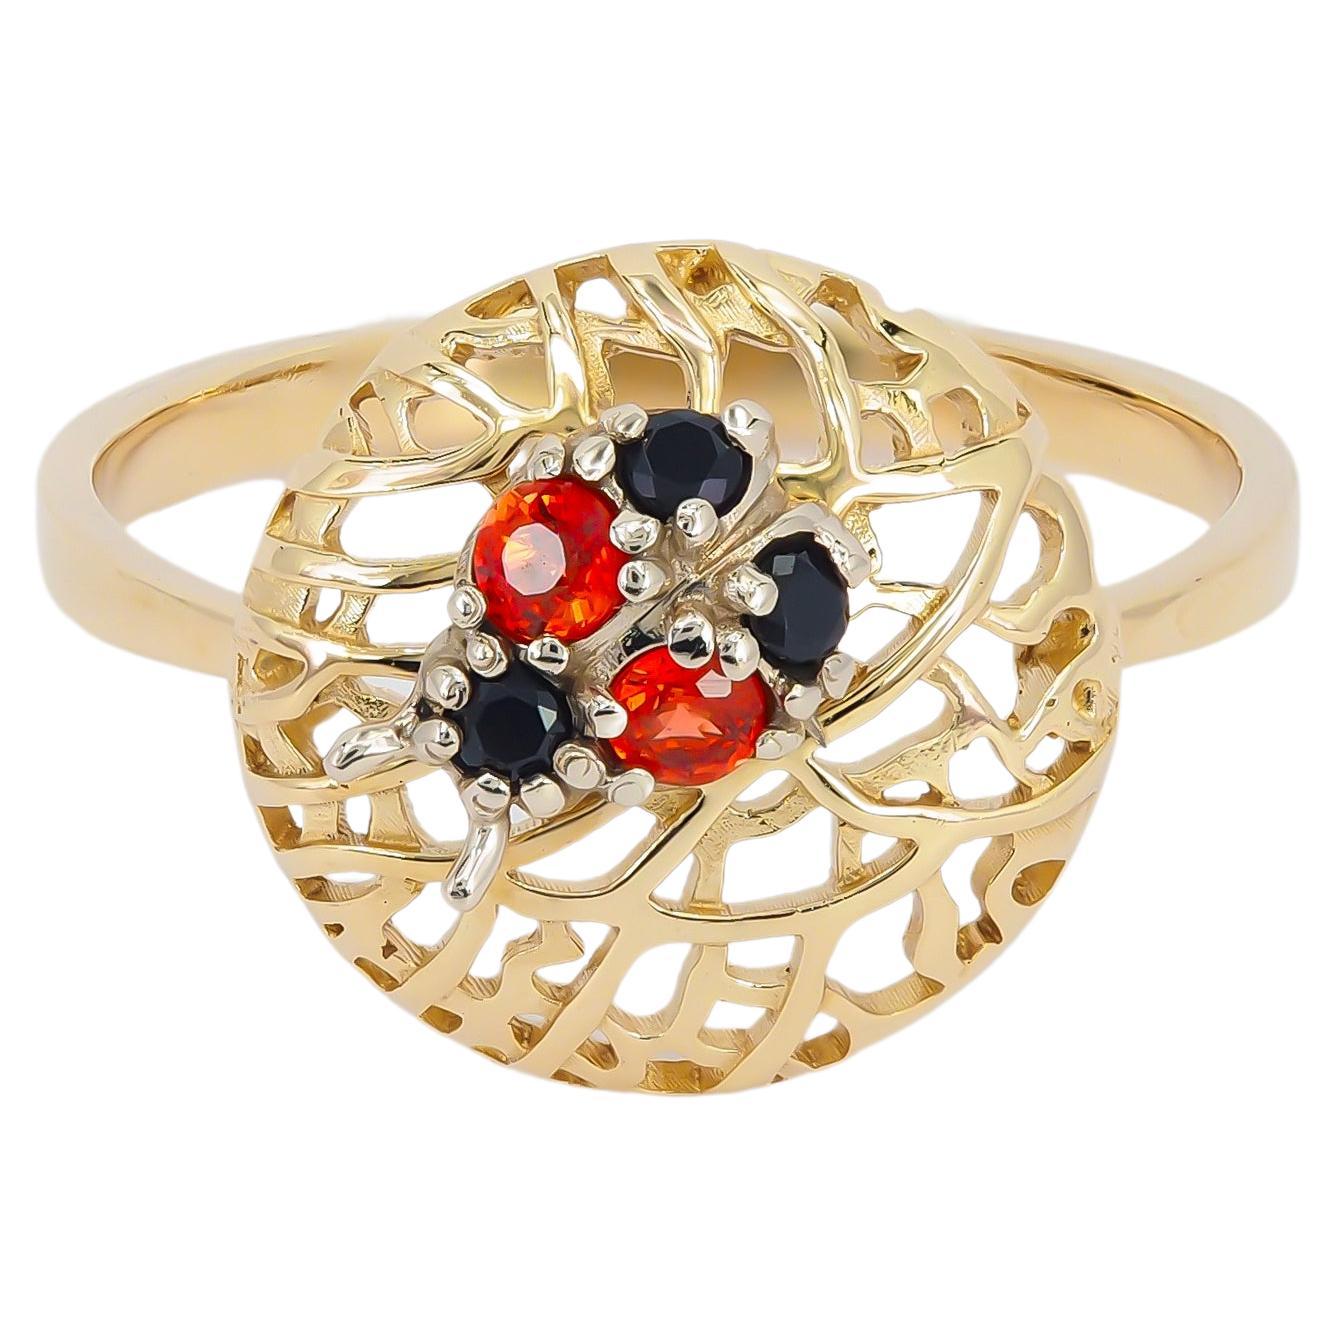 14 karat Gold Ring with Sapphires, Spinels. Ladybug gold Ring.